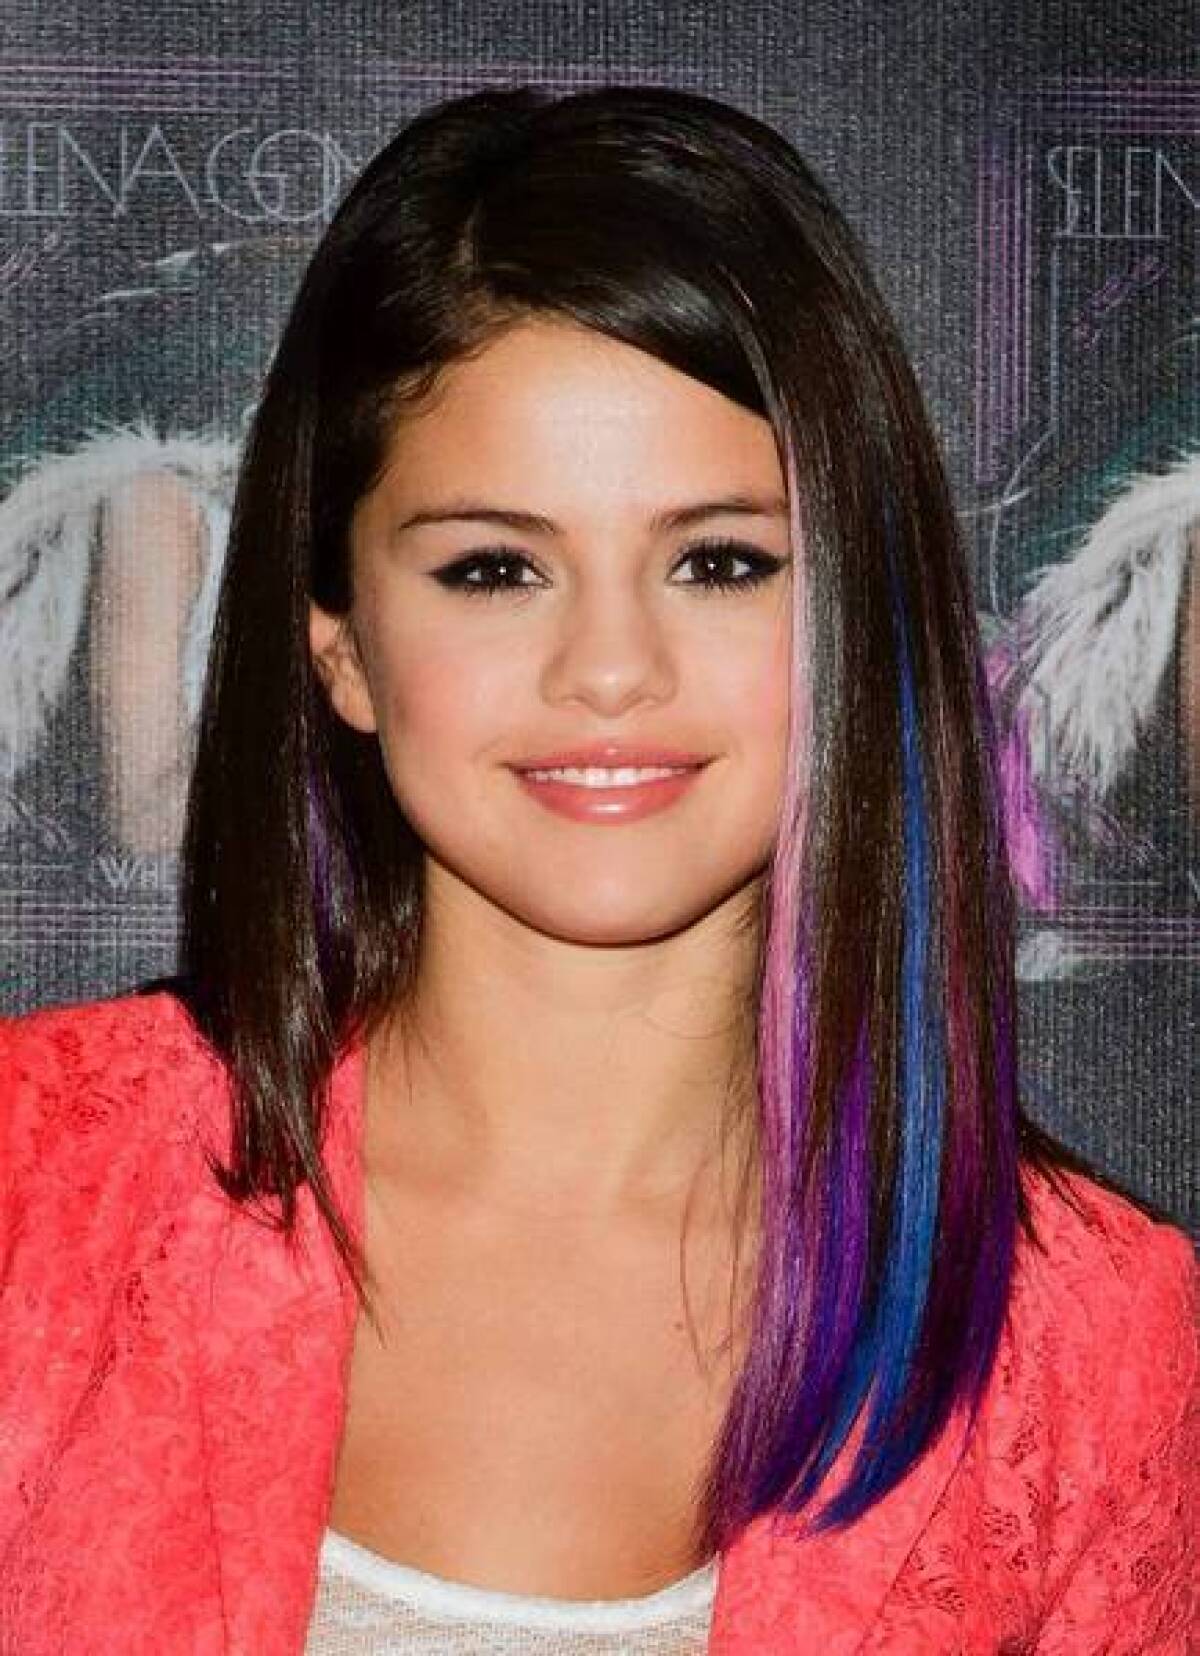 Singer Selena Gomez sports jewel-toned streaks in her smooth 'do.